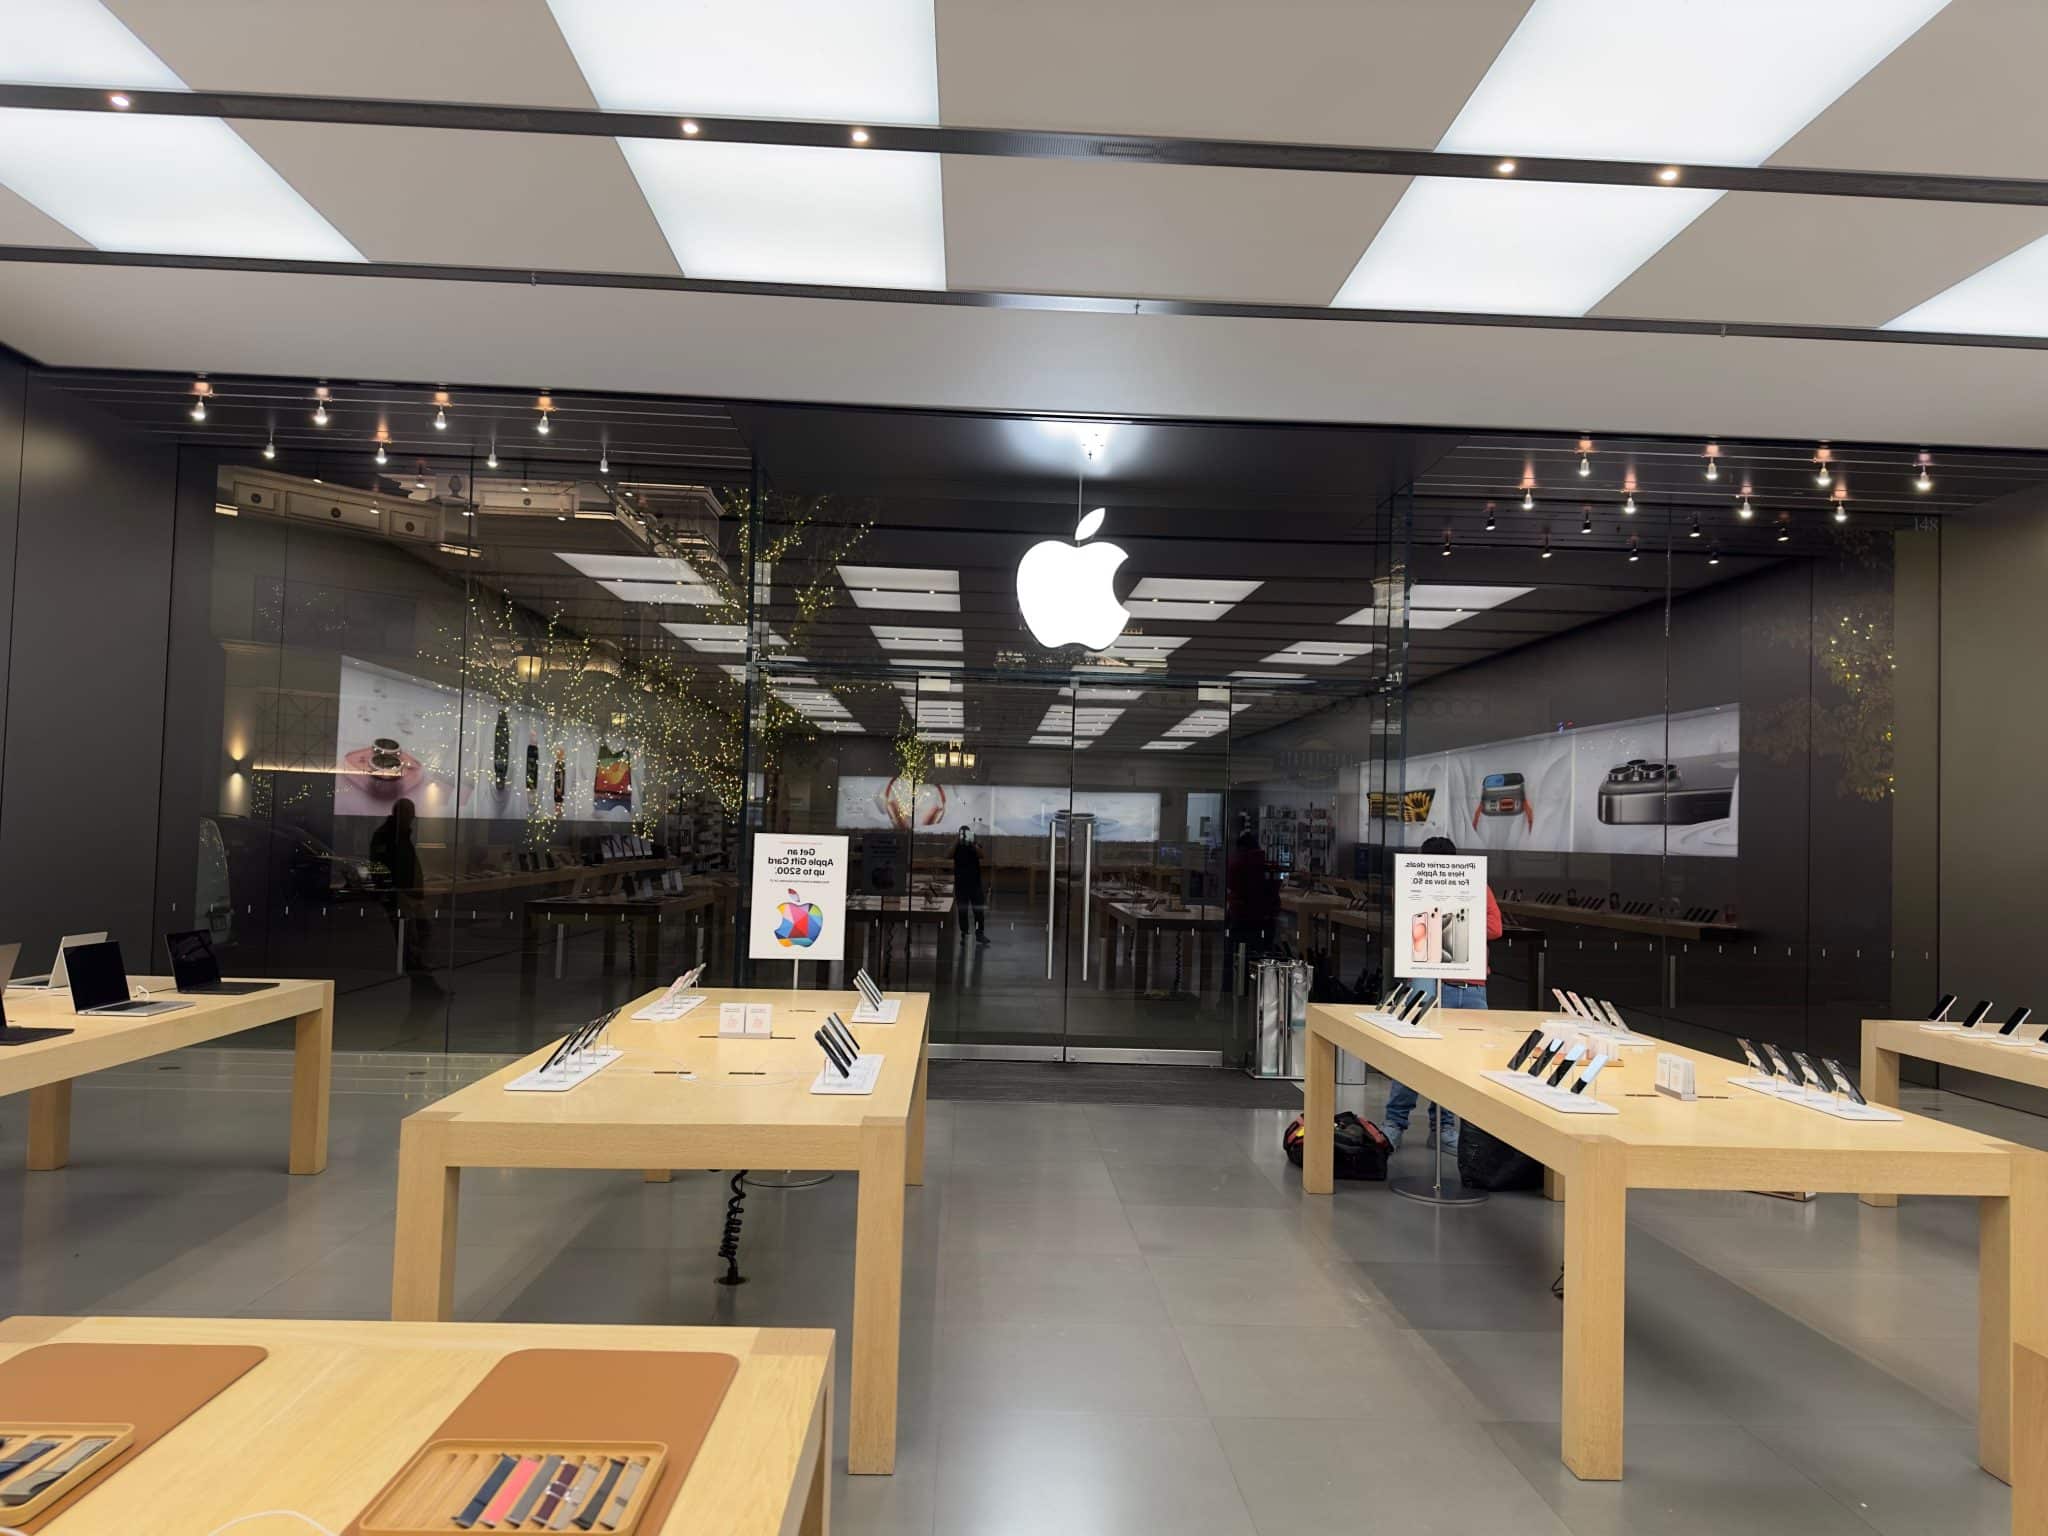 Retail Window Film Improves Comfort at Apple Store